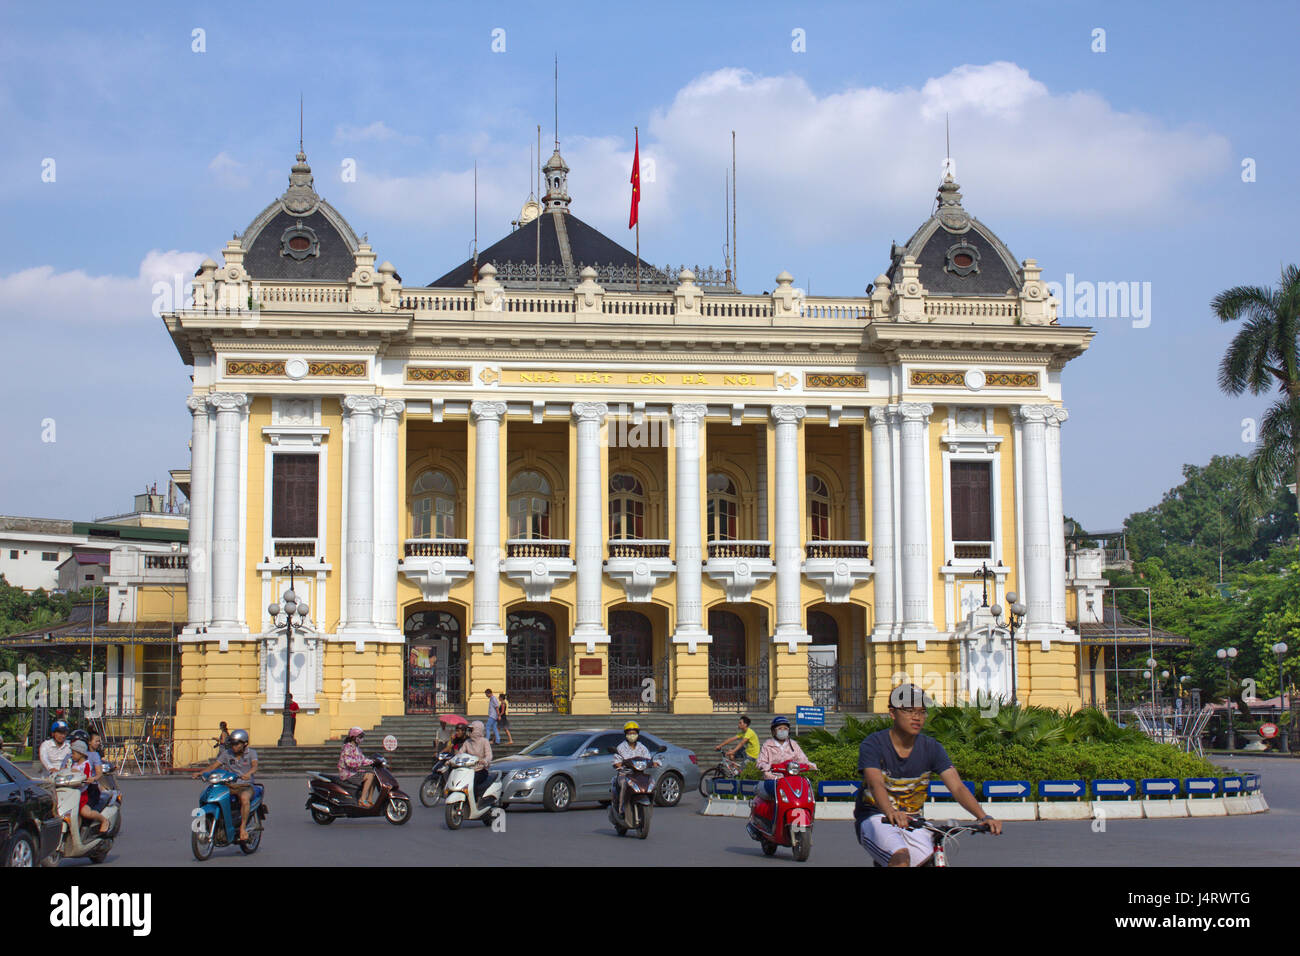 L'Opera House, il Performing Arts Center del quartiere francese, Hanoi, Vietnam Foto Stock